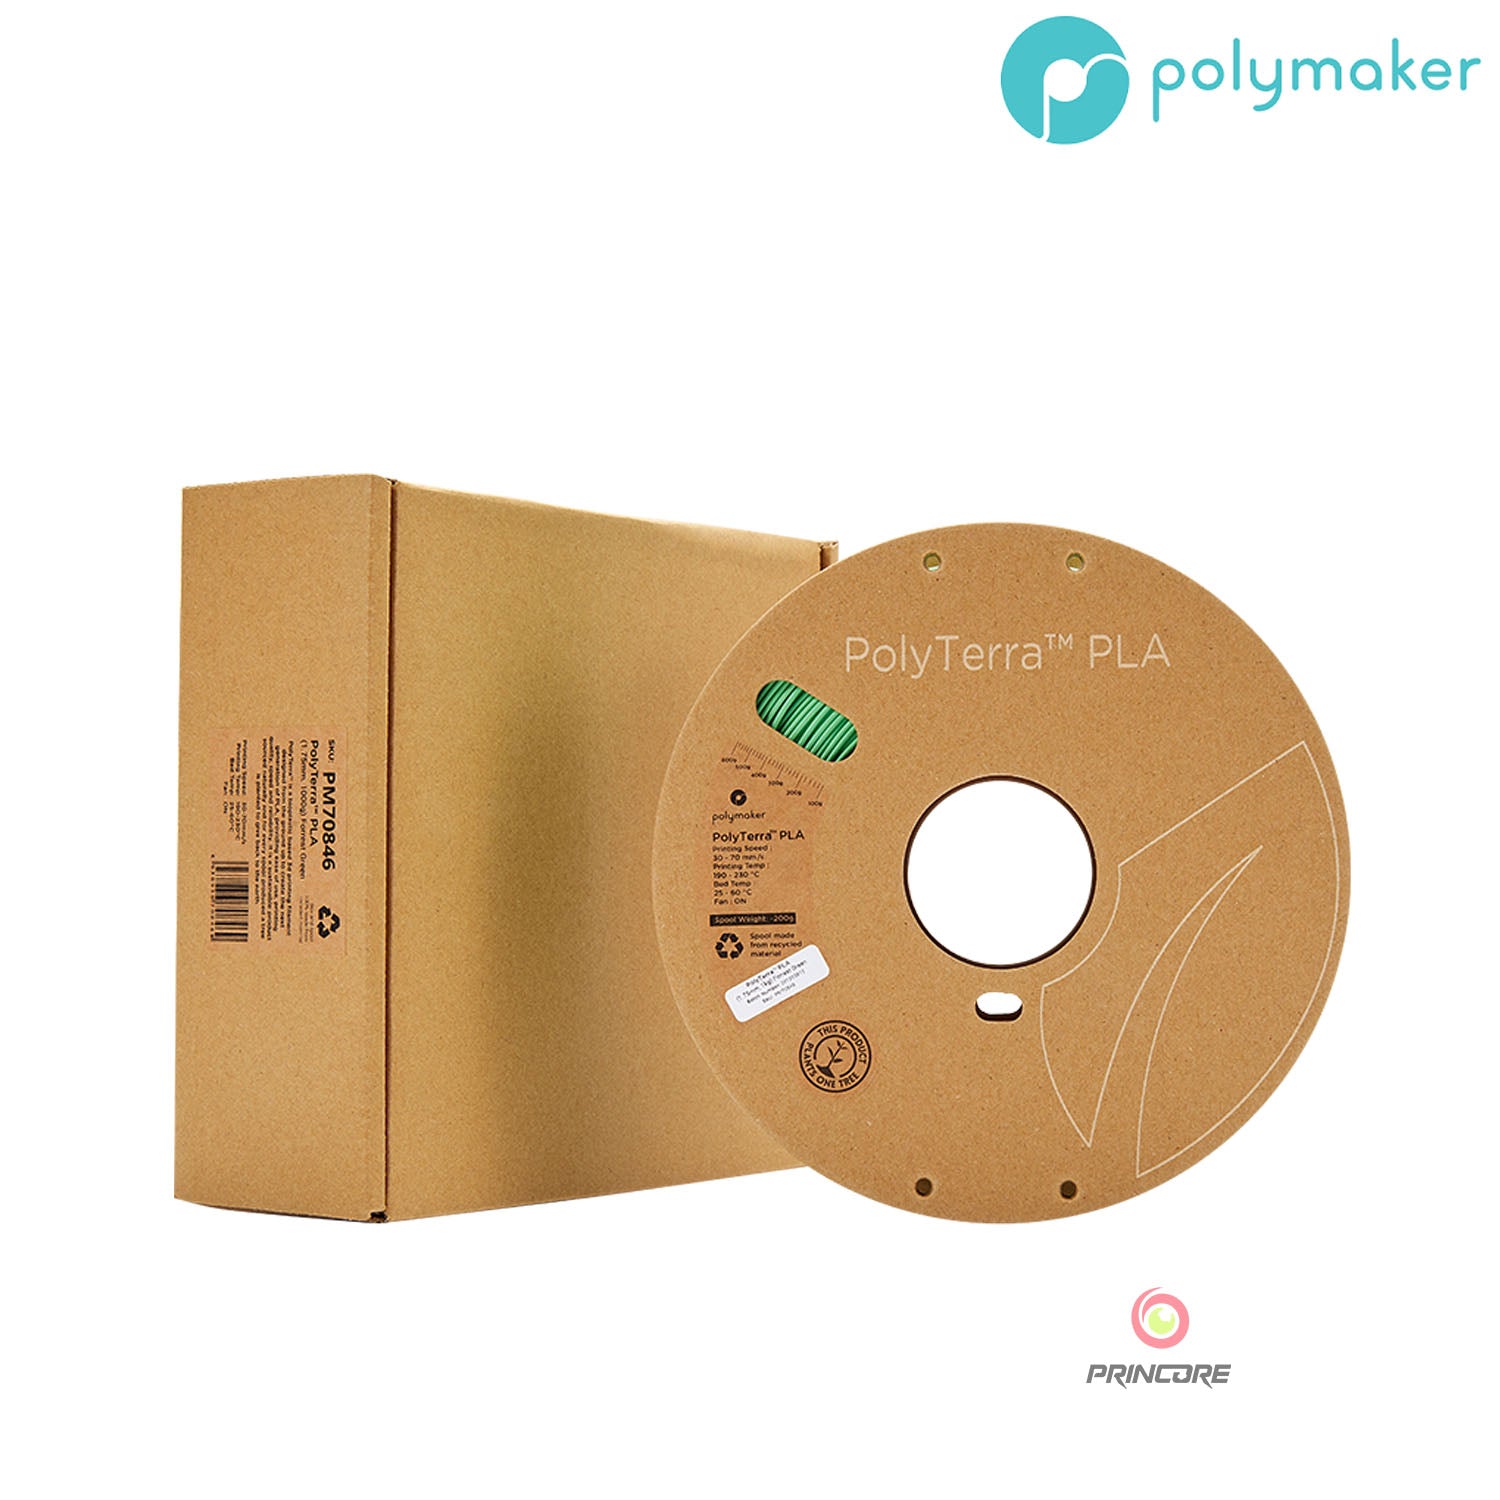 Polymaker PolyTerra™ PLA - Forrest Green [1.75mm] (19,90€/Kg)